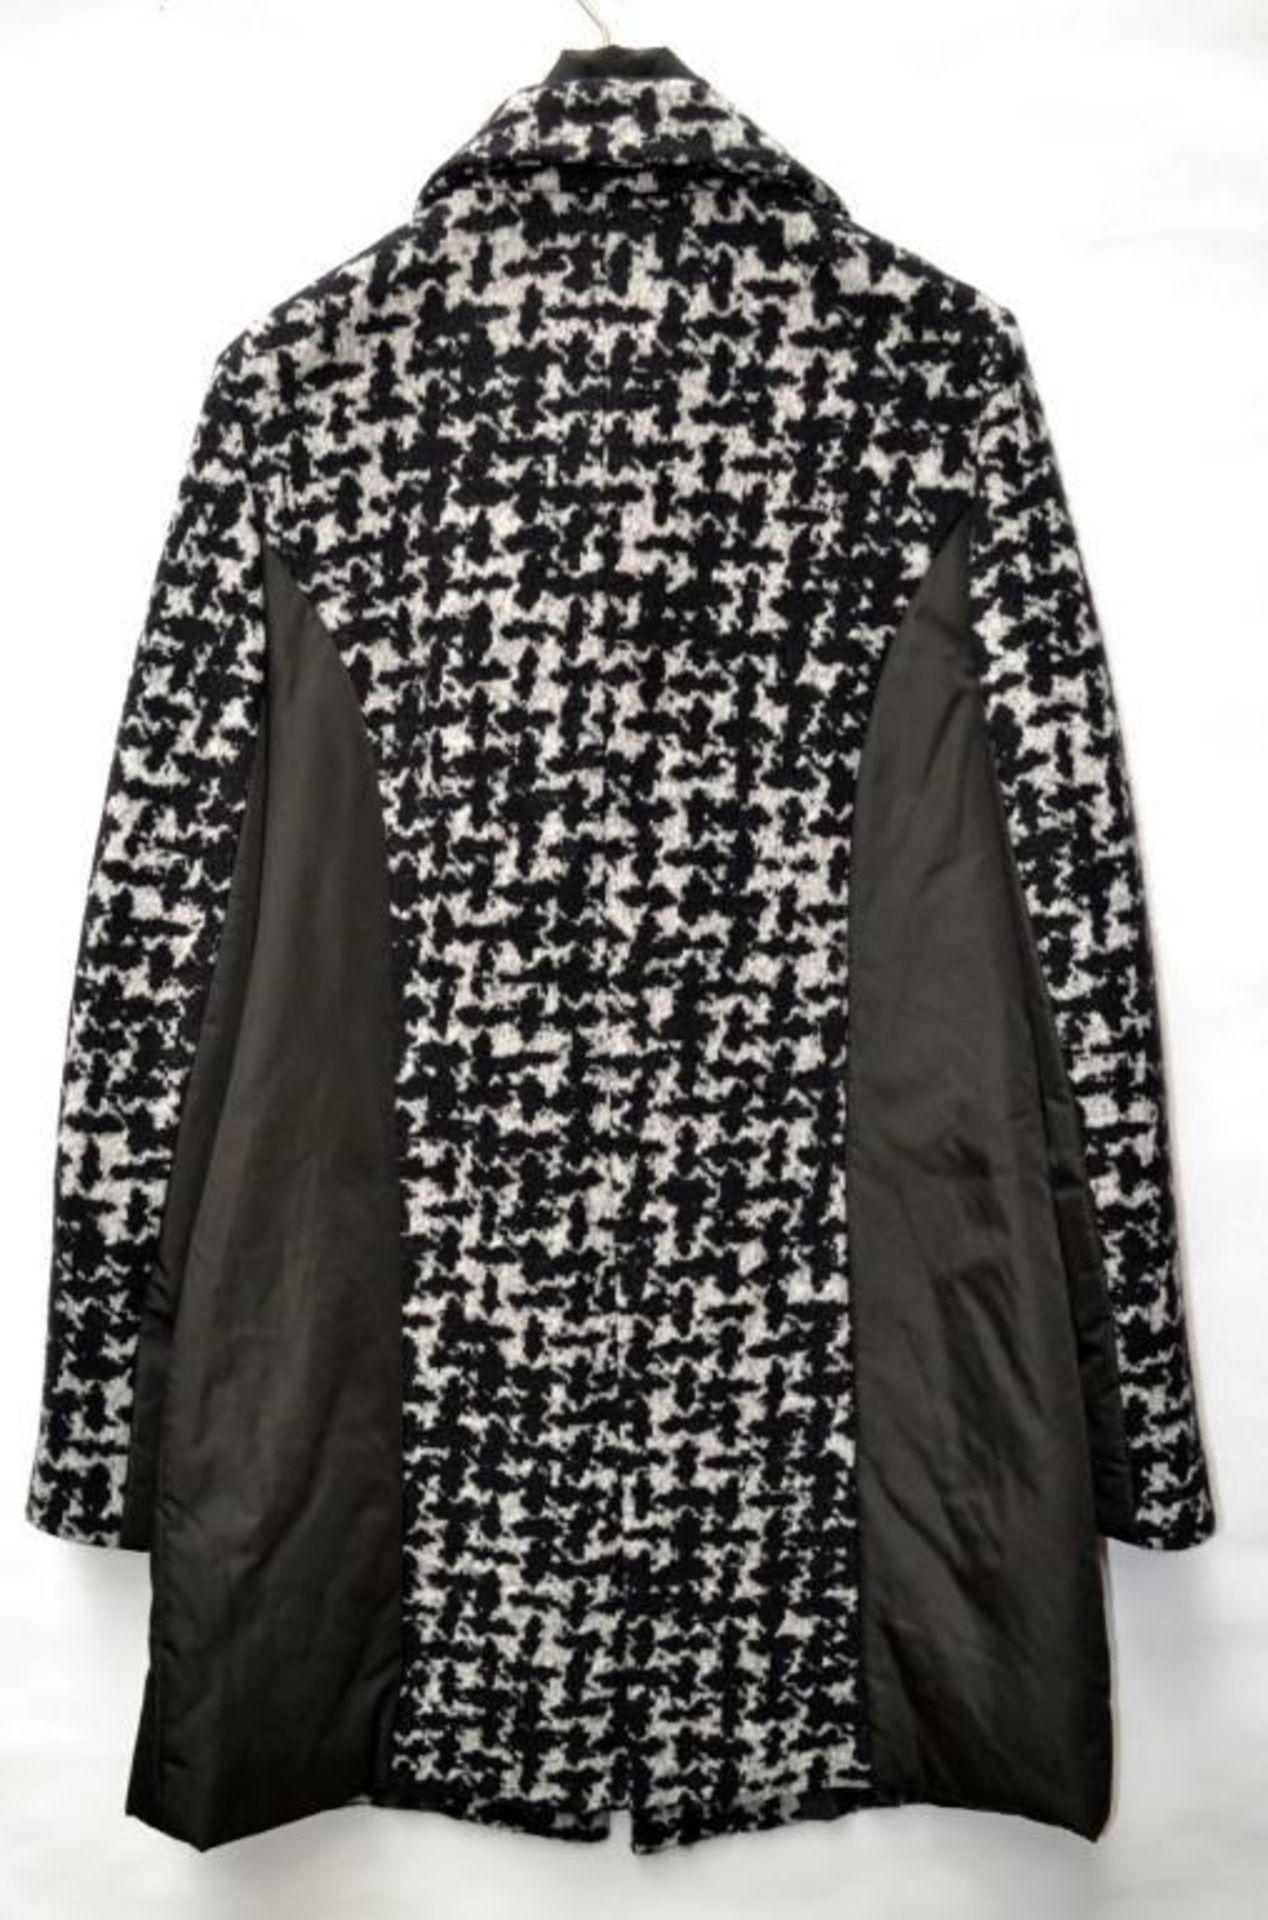 1 x Steilmann KSTN By Kirsten Womens Winter Coat - Wool/Cotton Blend Coat Featuring An Oversized Hou - Image 4 of 6